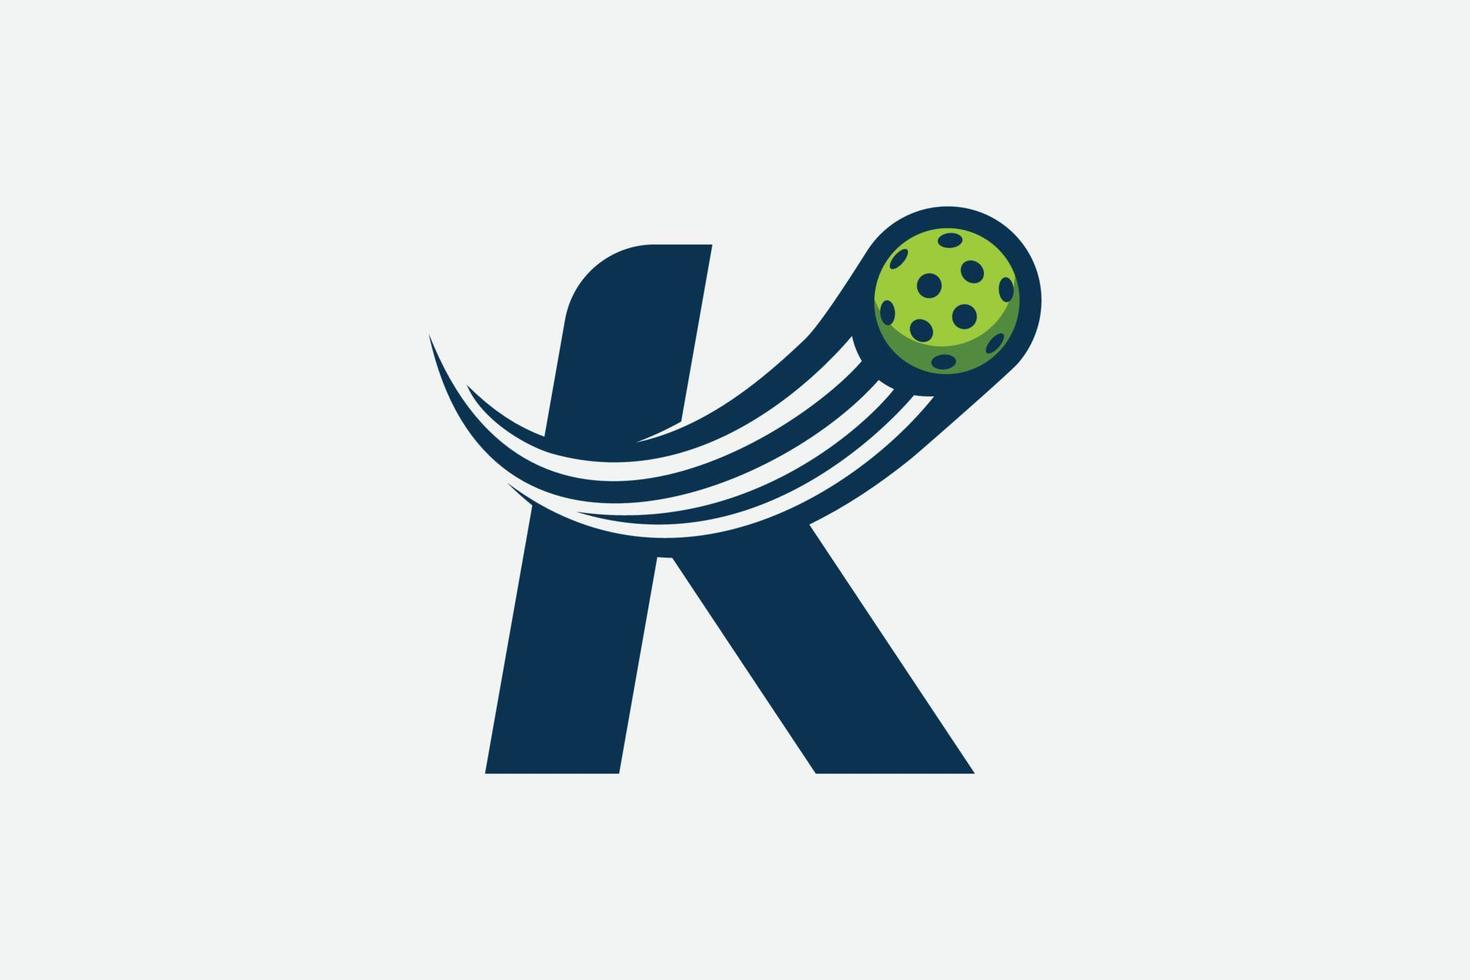 brief k logo met in beweging augurk vector